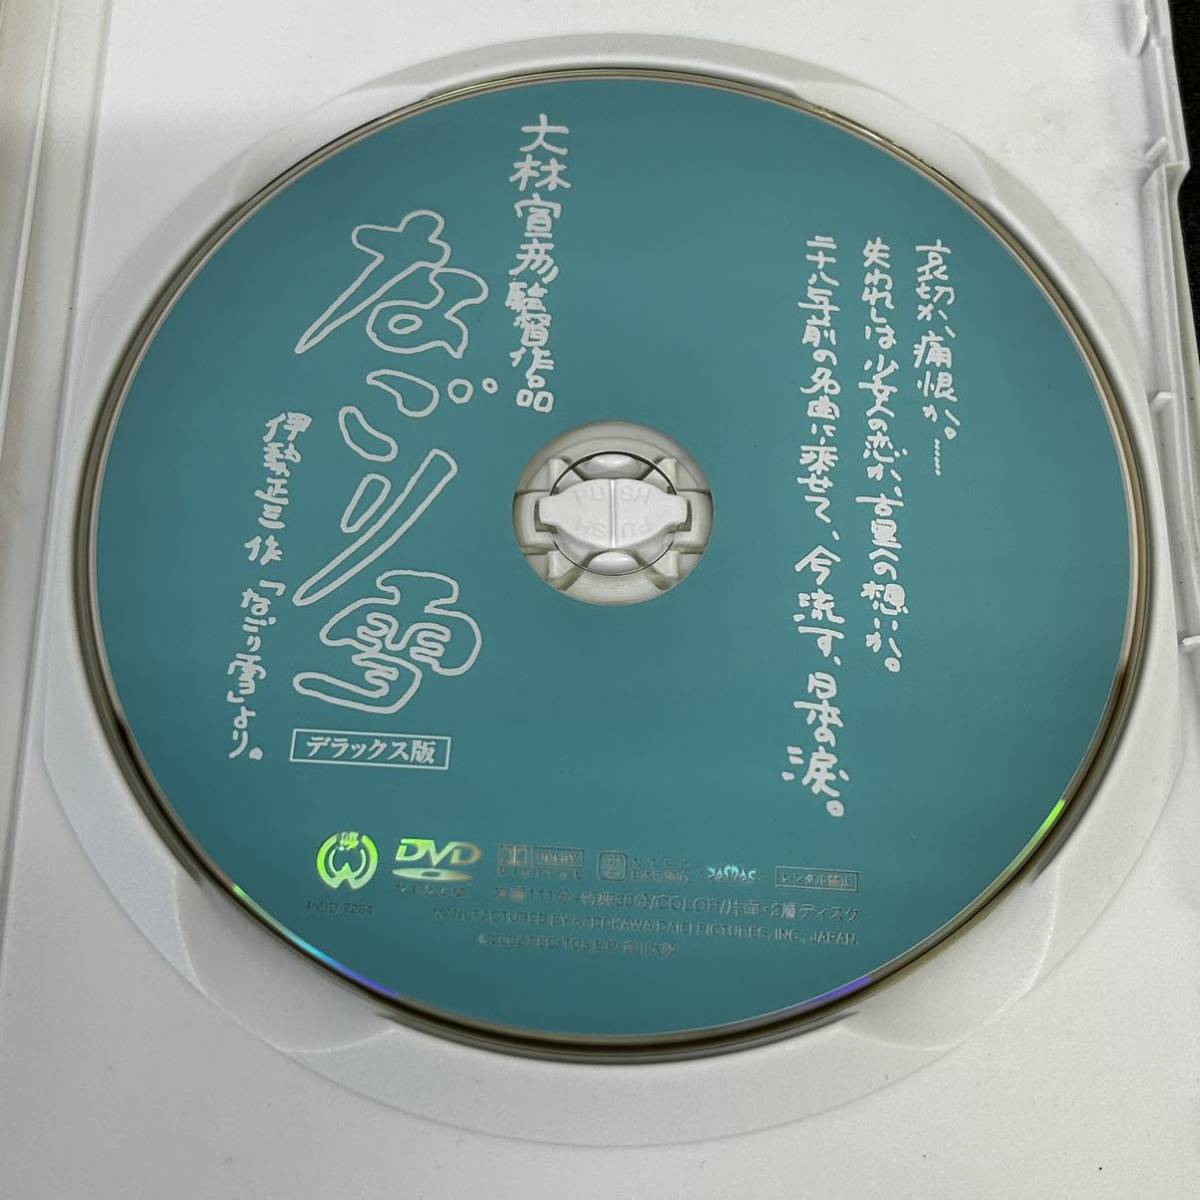 12D1 DVD なごり雪 デラックス版 大林宣彦 三浦友和 須藤温子 長澤まさみ_画像4